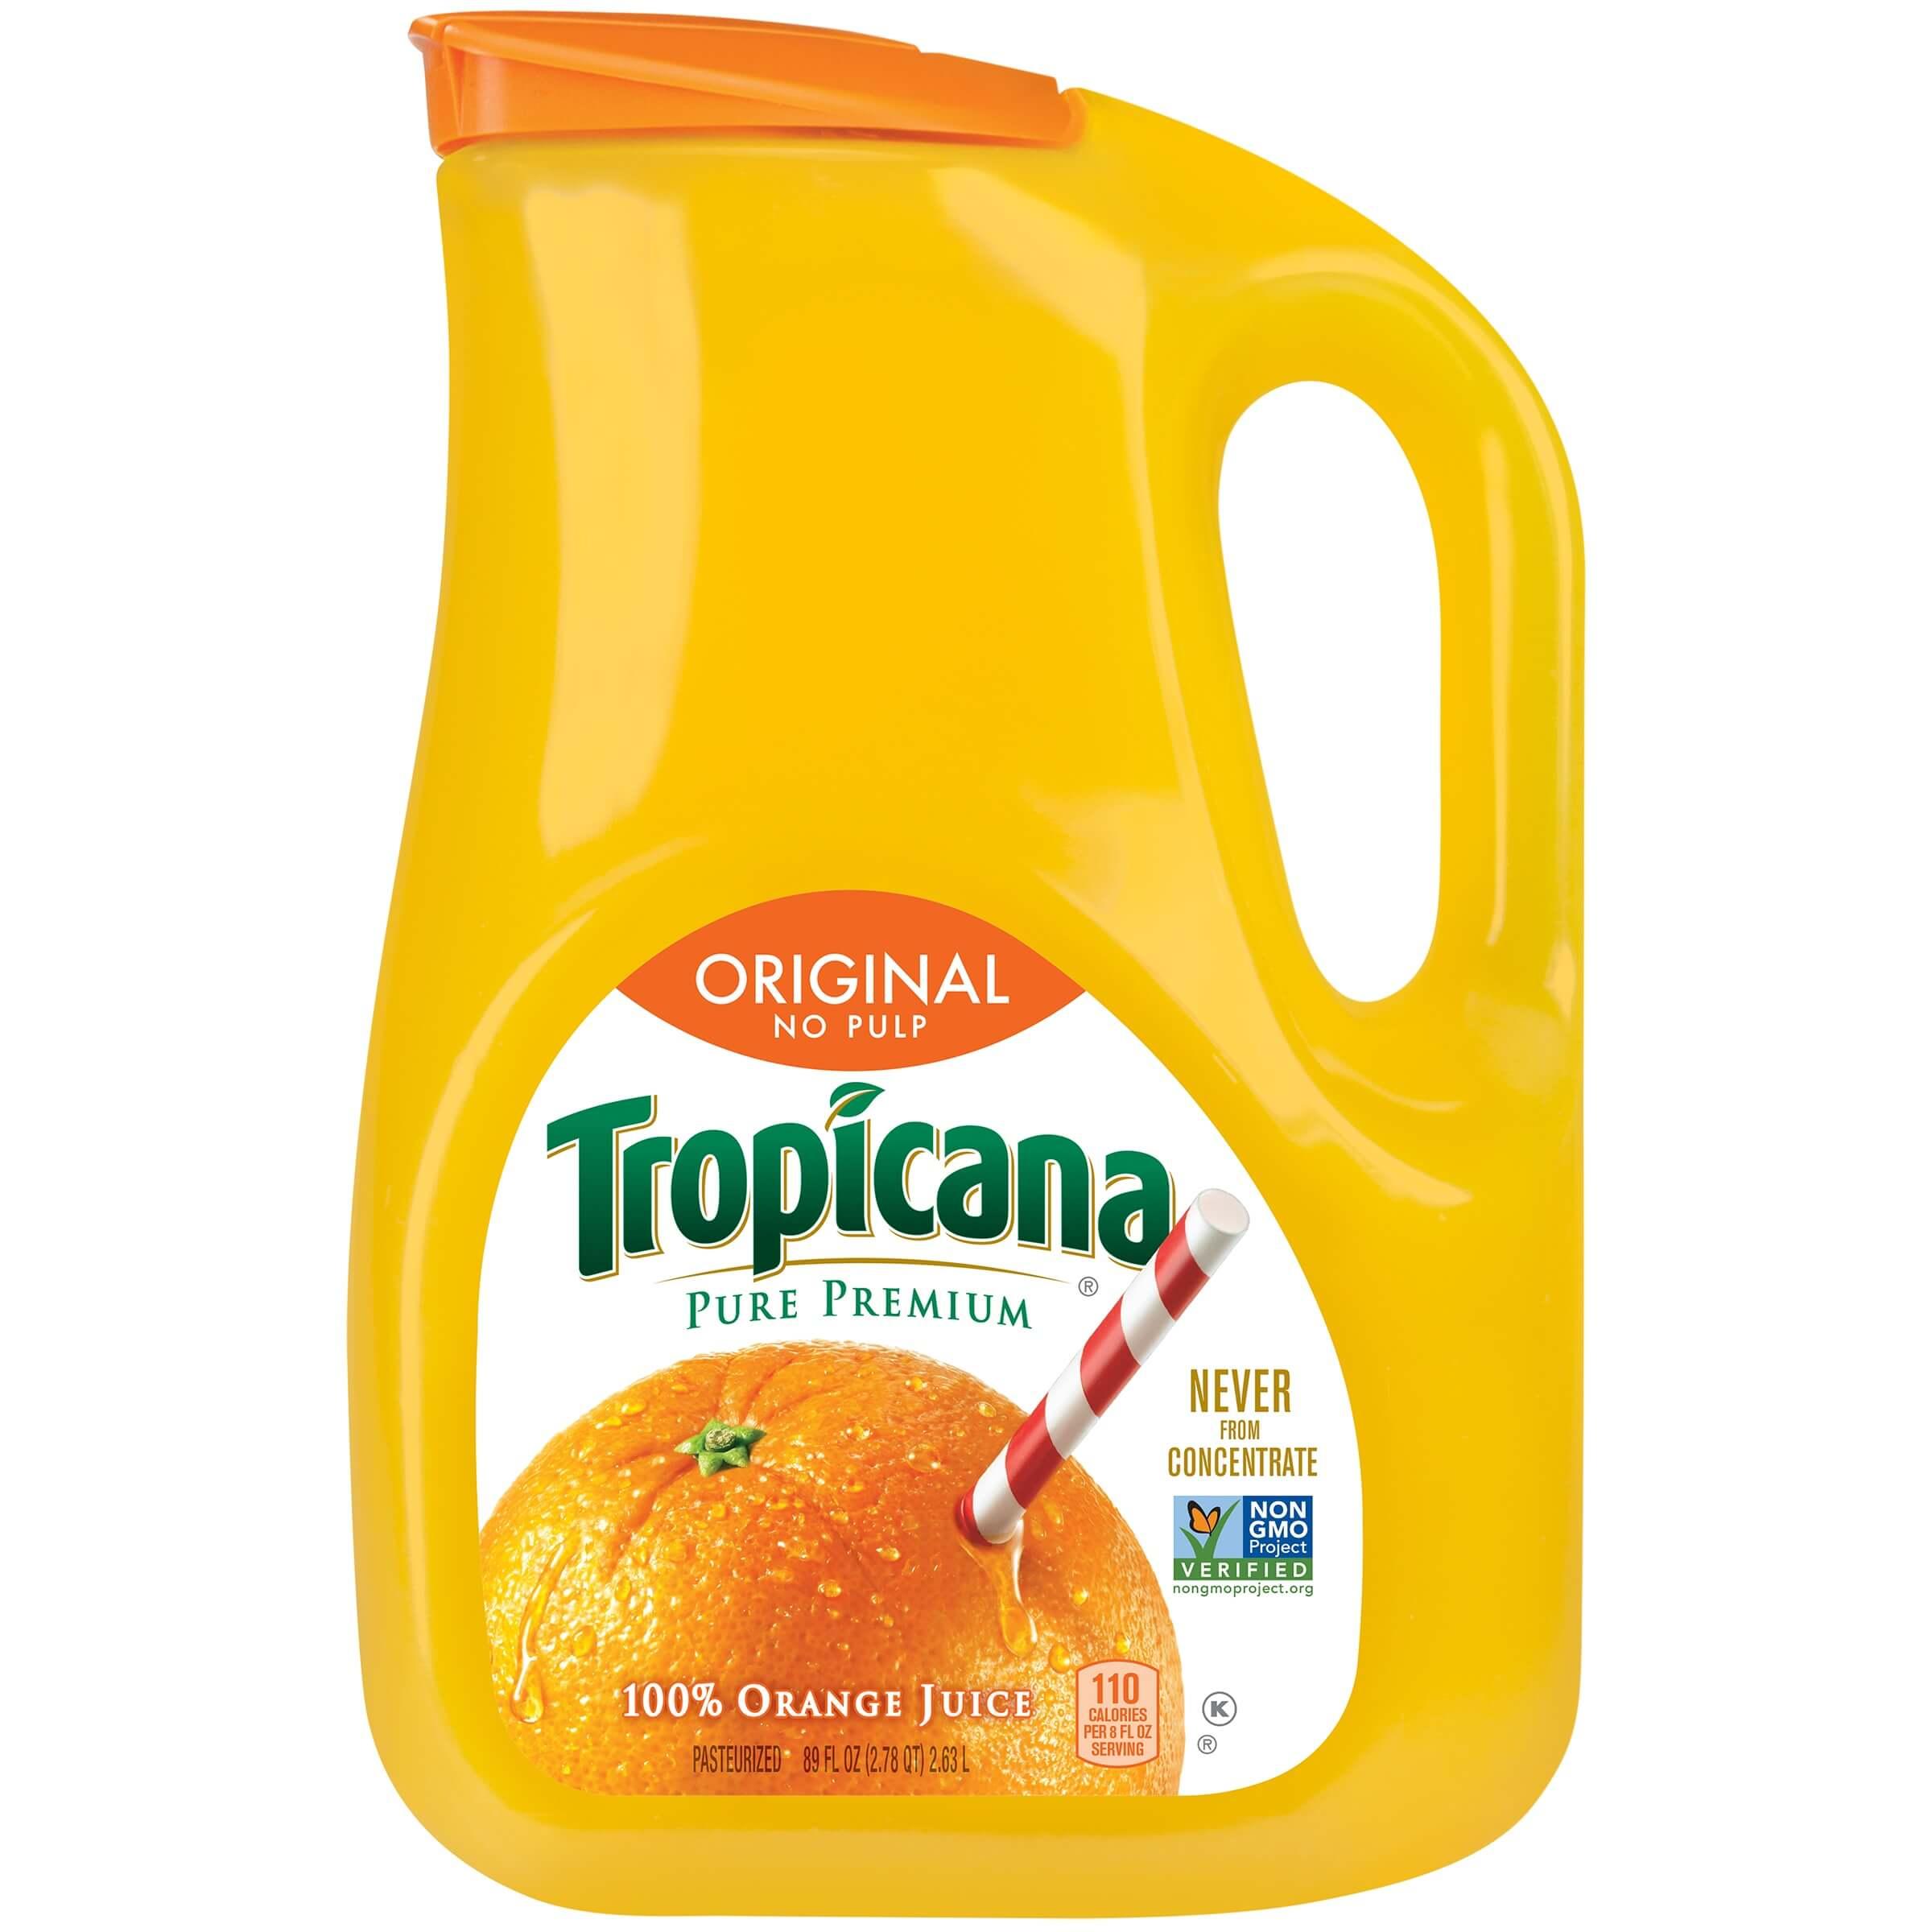 Tropicana Pure Premium No Pulp 100% Orange Juice 89oz